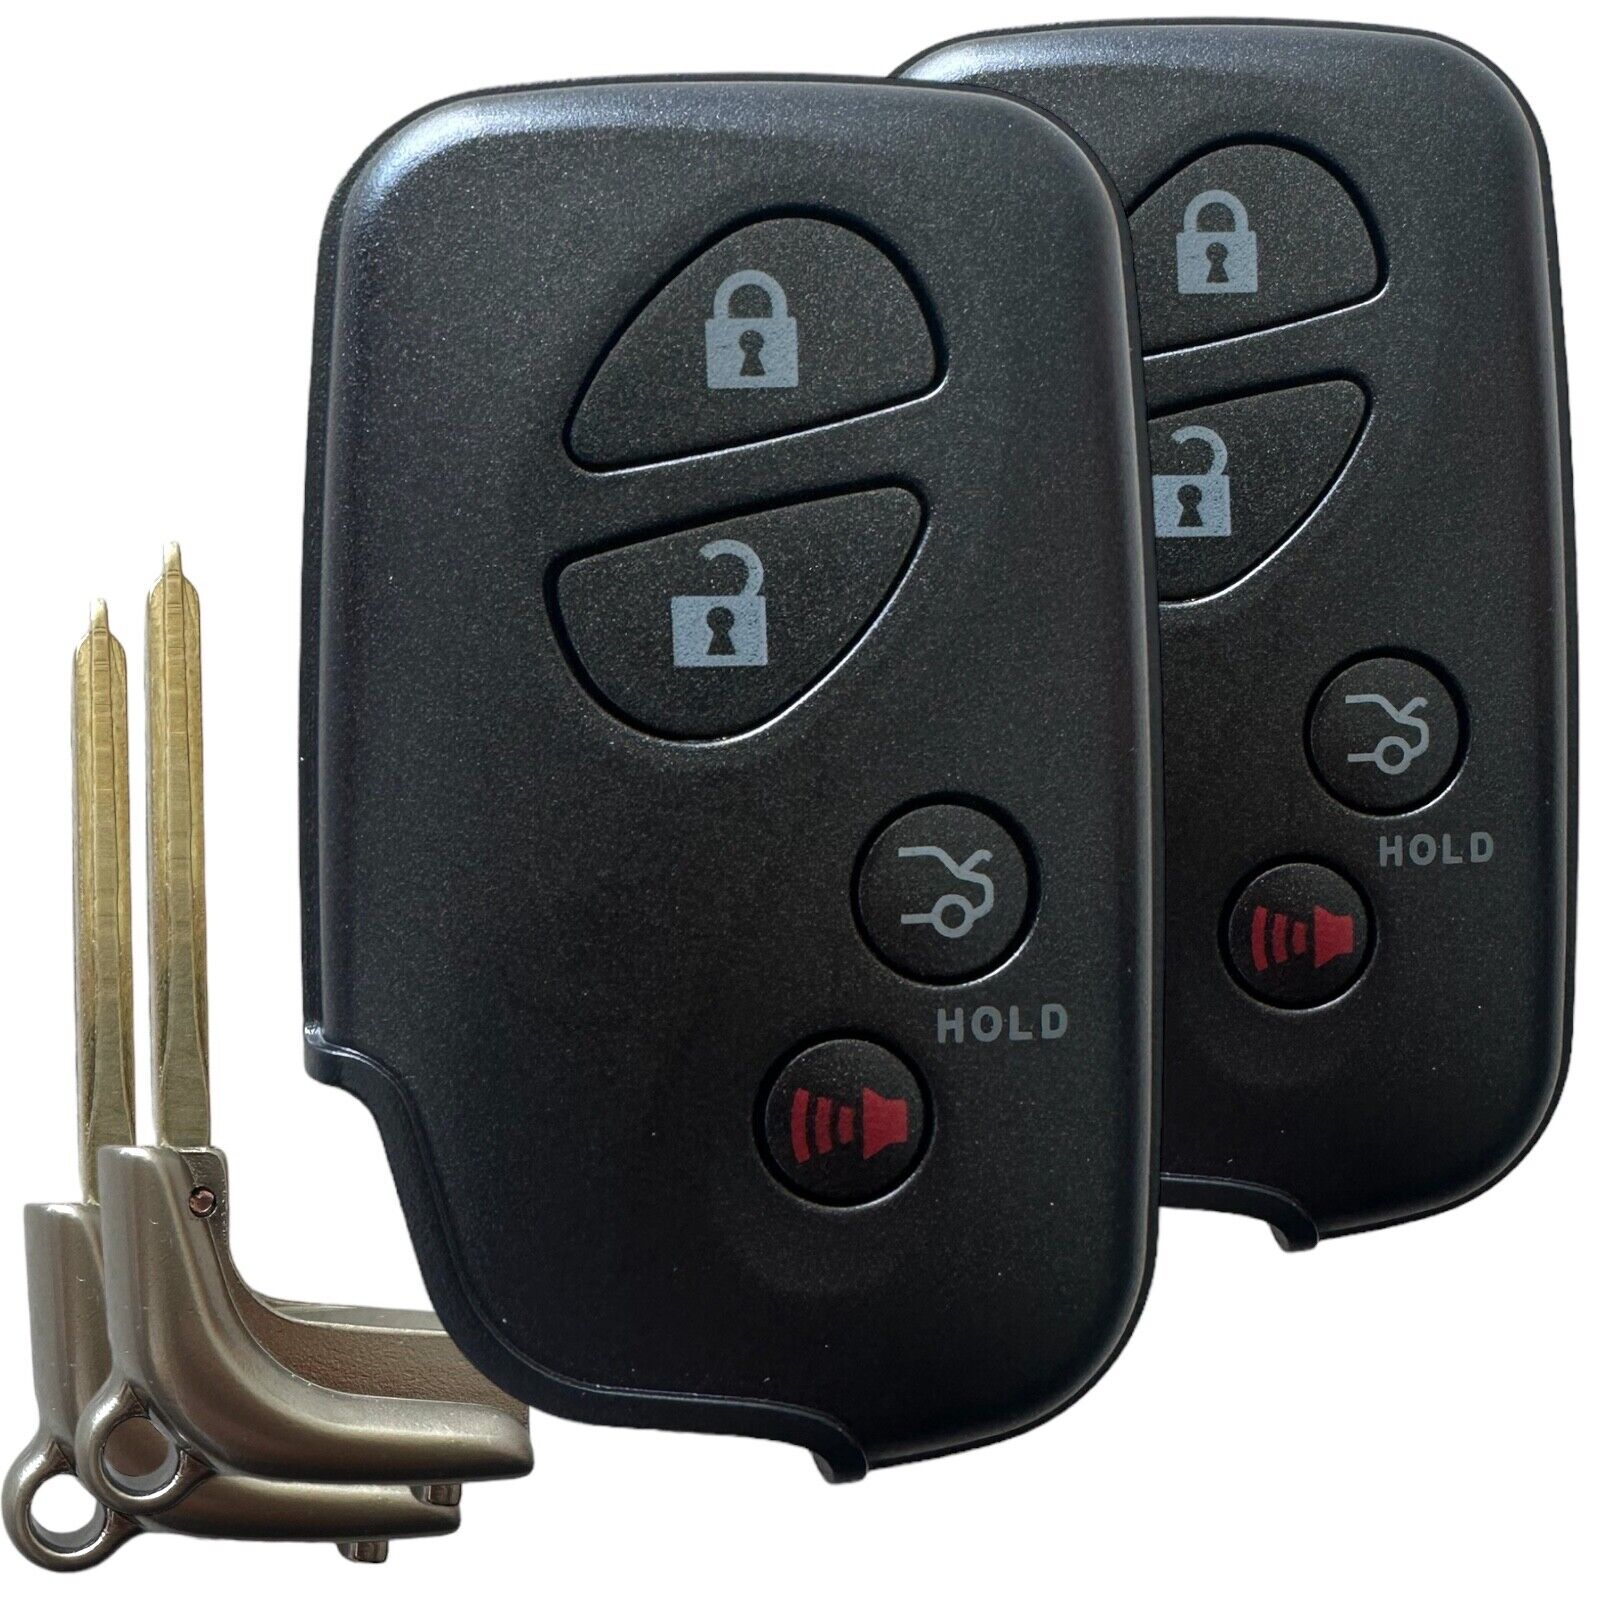 2 Remote Black 4-Button Car Key Fob for 2006 2007 2008 Lexus IS250 HYQ14AAB